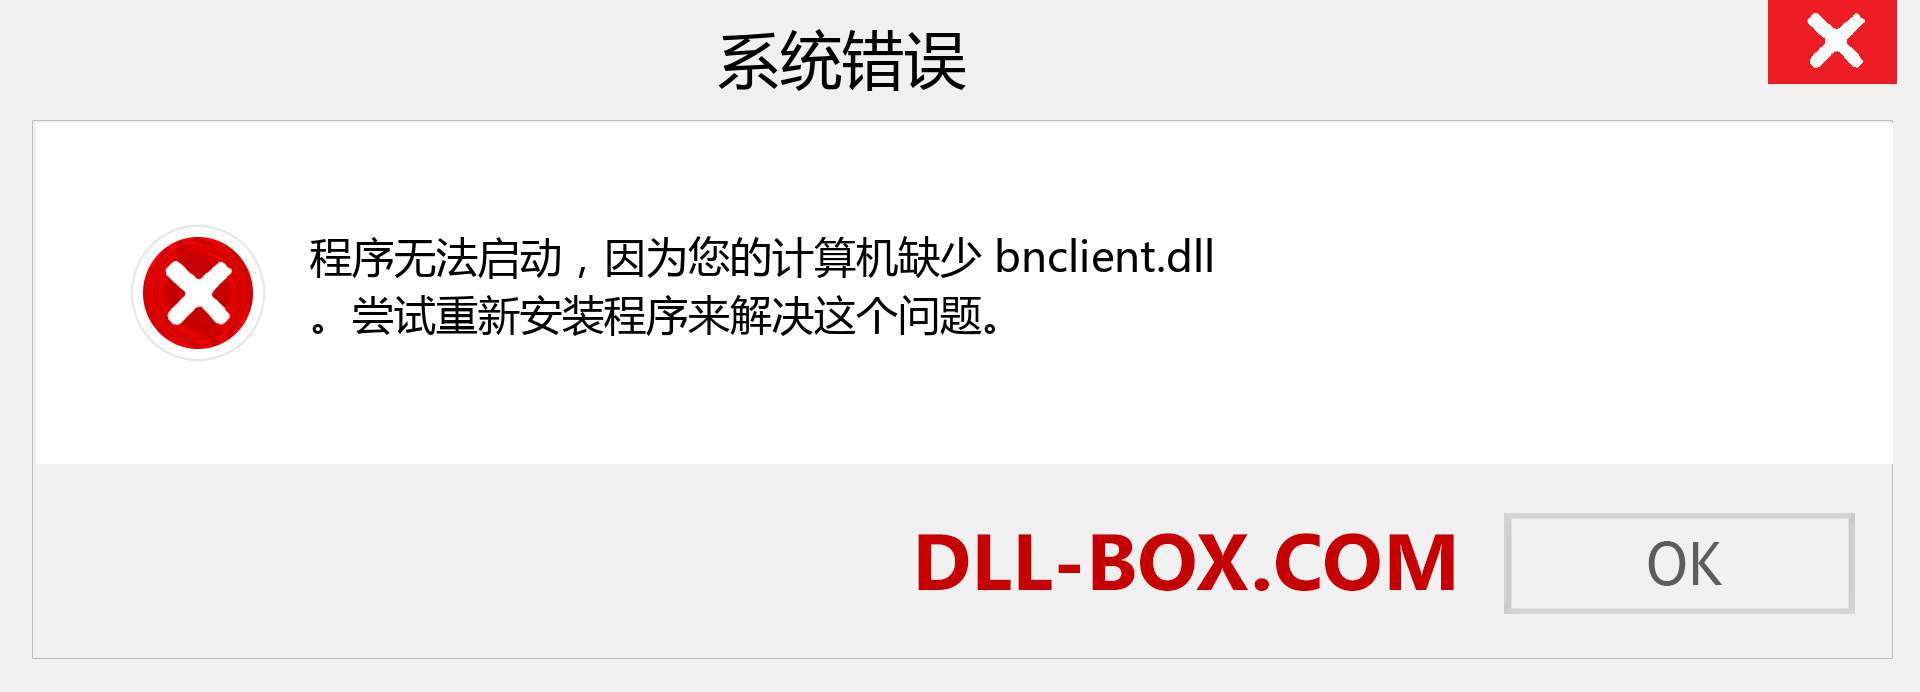 bnclient.dll 文件丢失？。 适用于 Windows 7、8、10 的下载 - 修复 Windows、照片、图像上的 bnclient dll 丢失错误